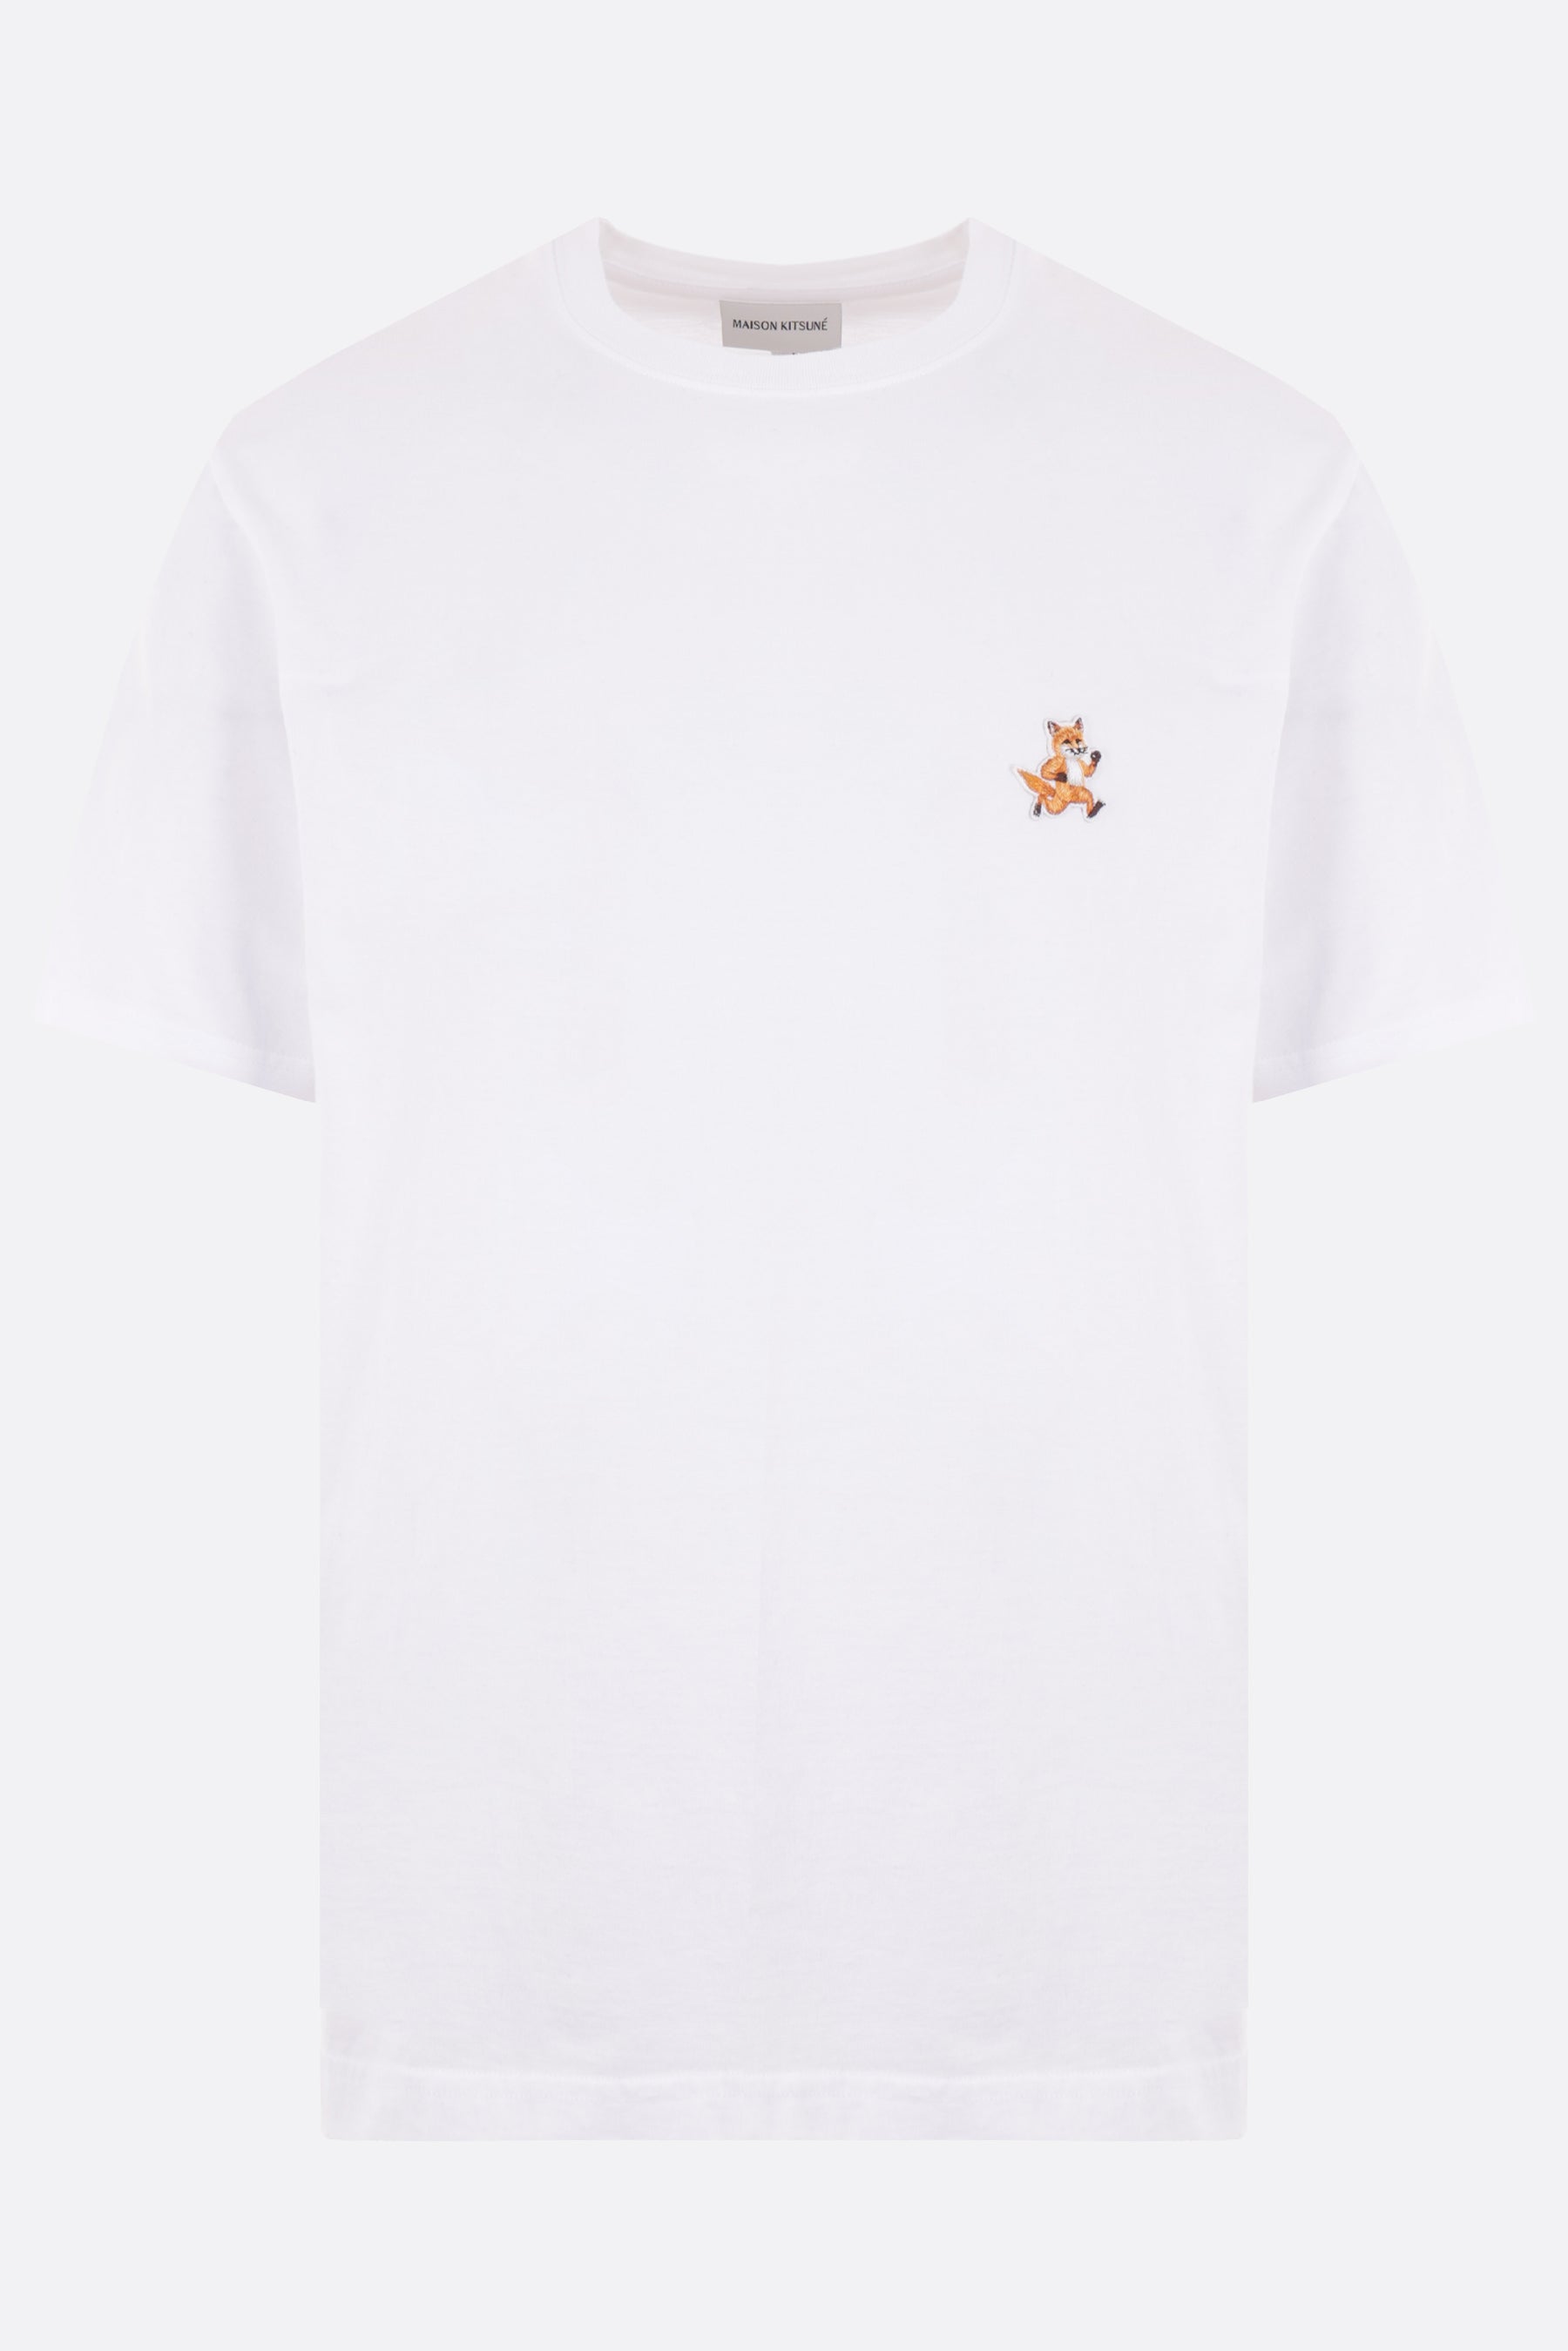 cotton t-shirt with Speedy Fox logo patch